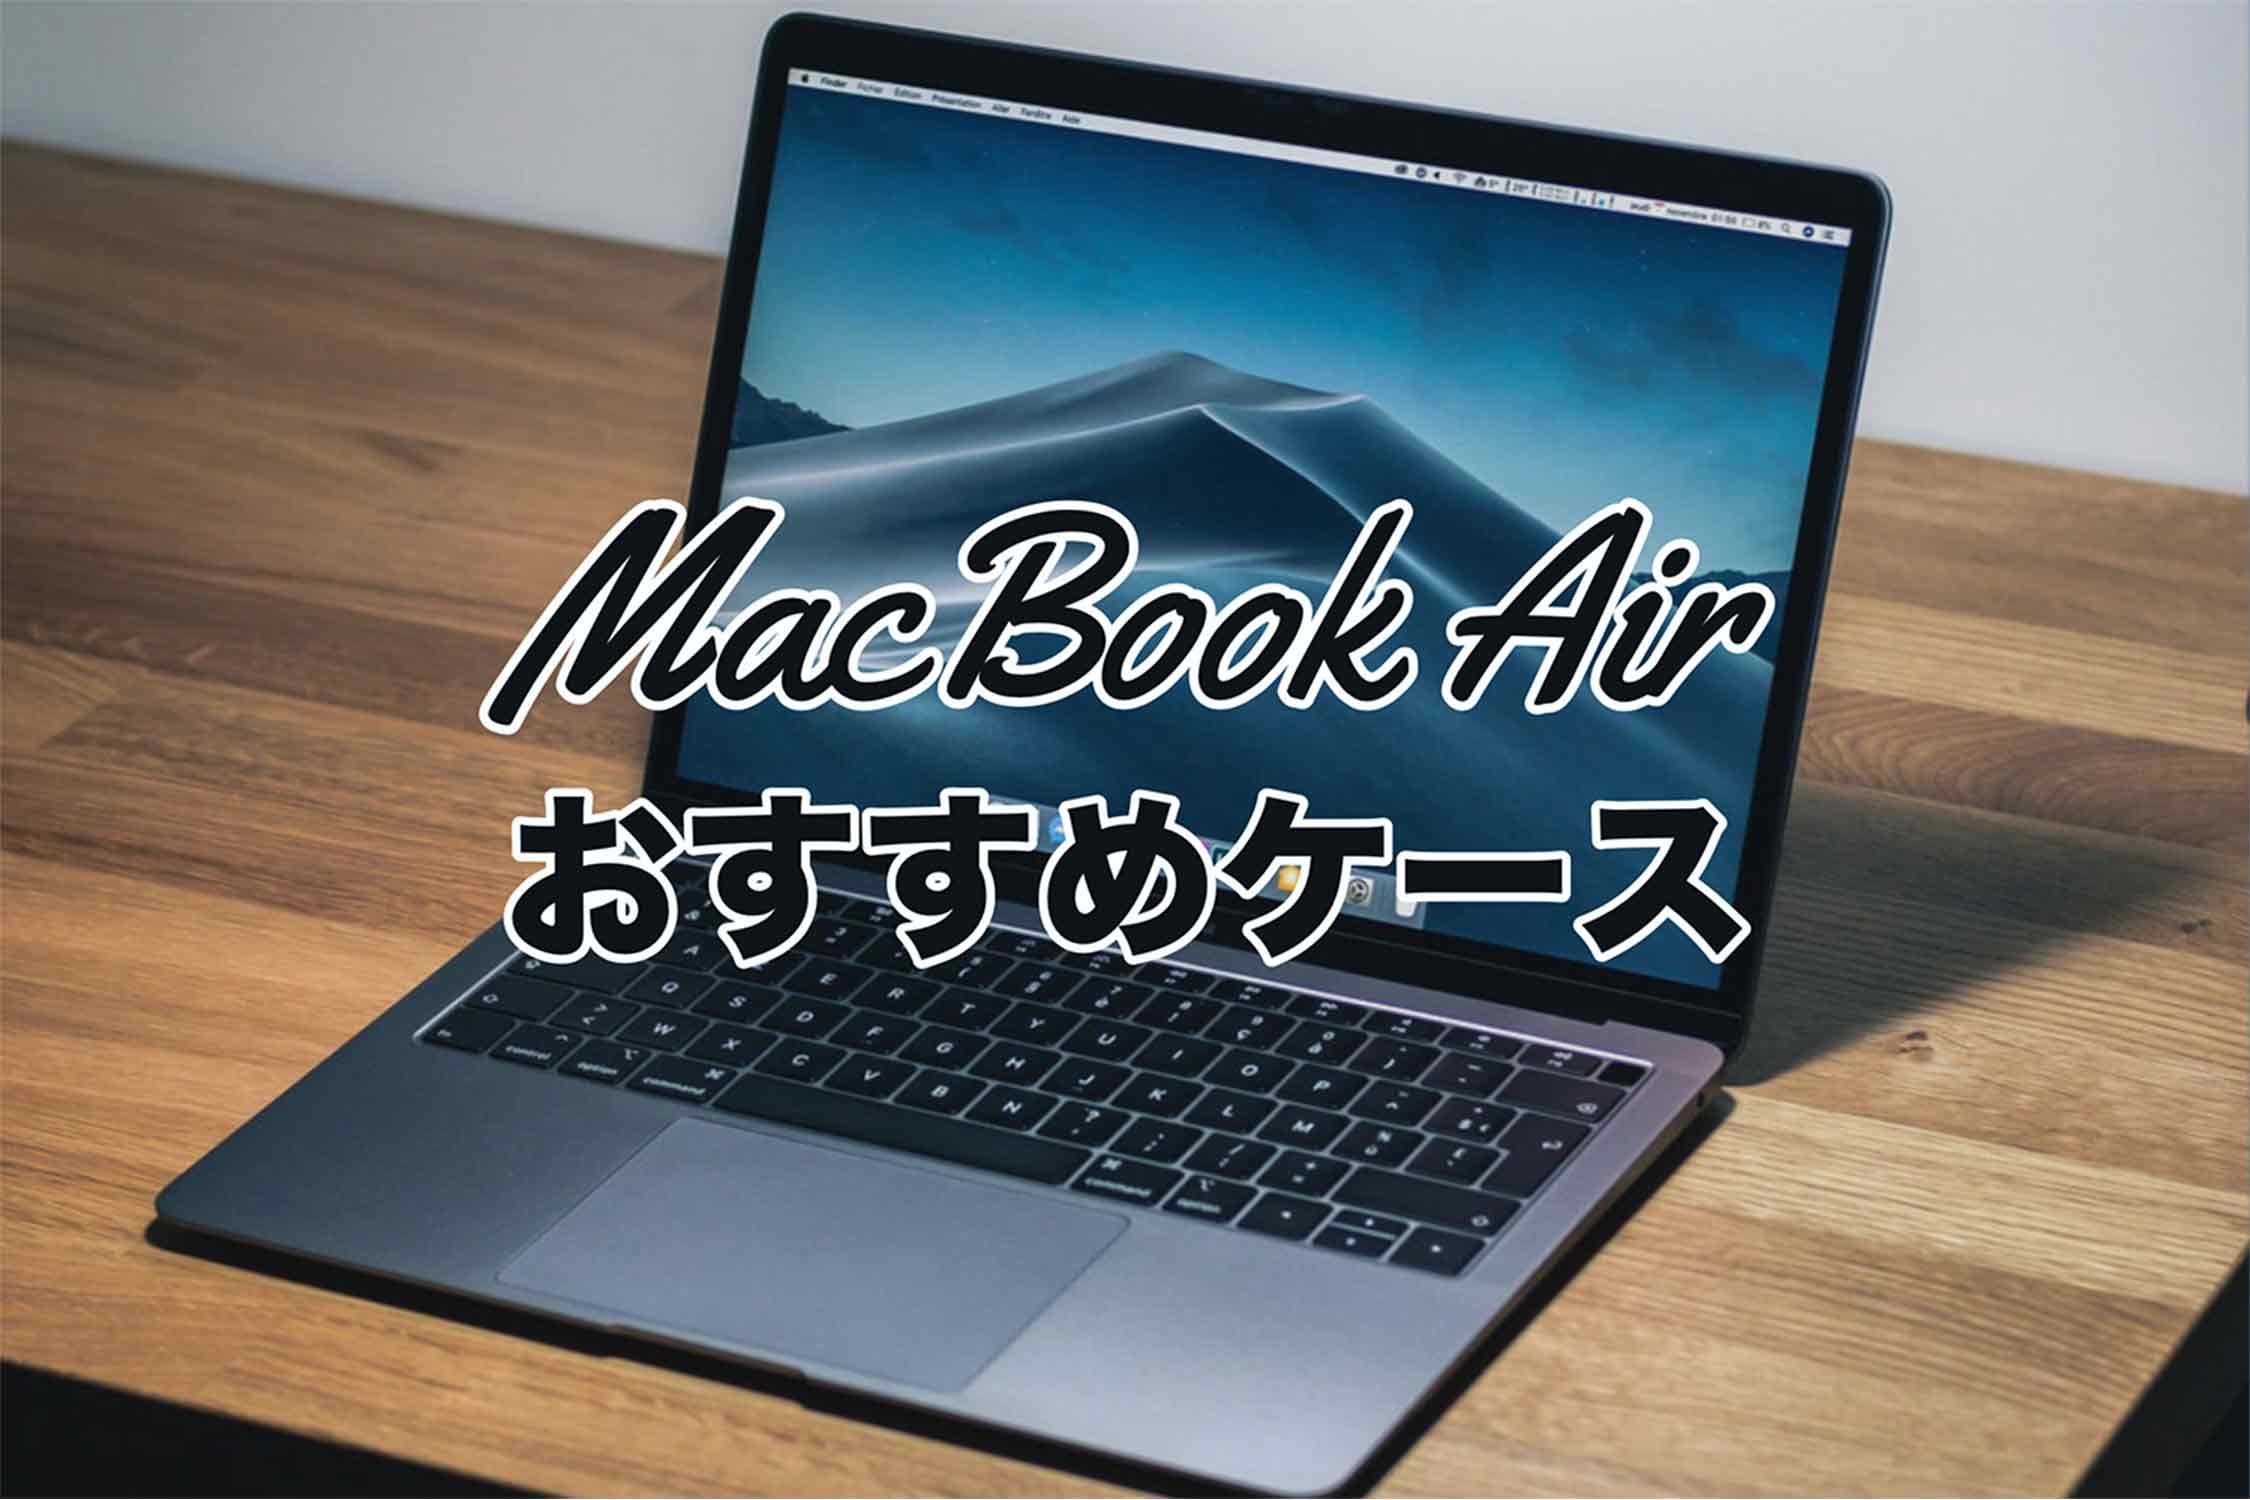 MacBook Airの持ち運びに便利なケースおすすめ10選!Amazonで人気ランキングを調査!